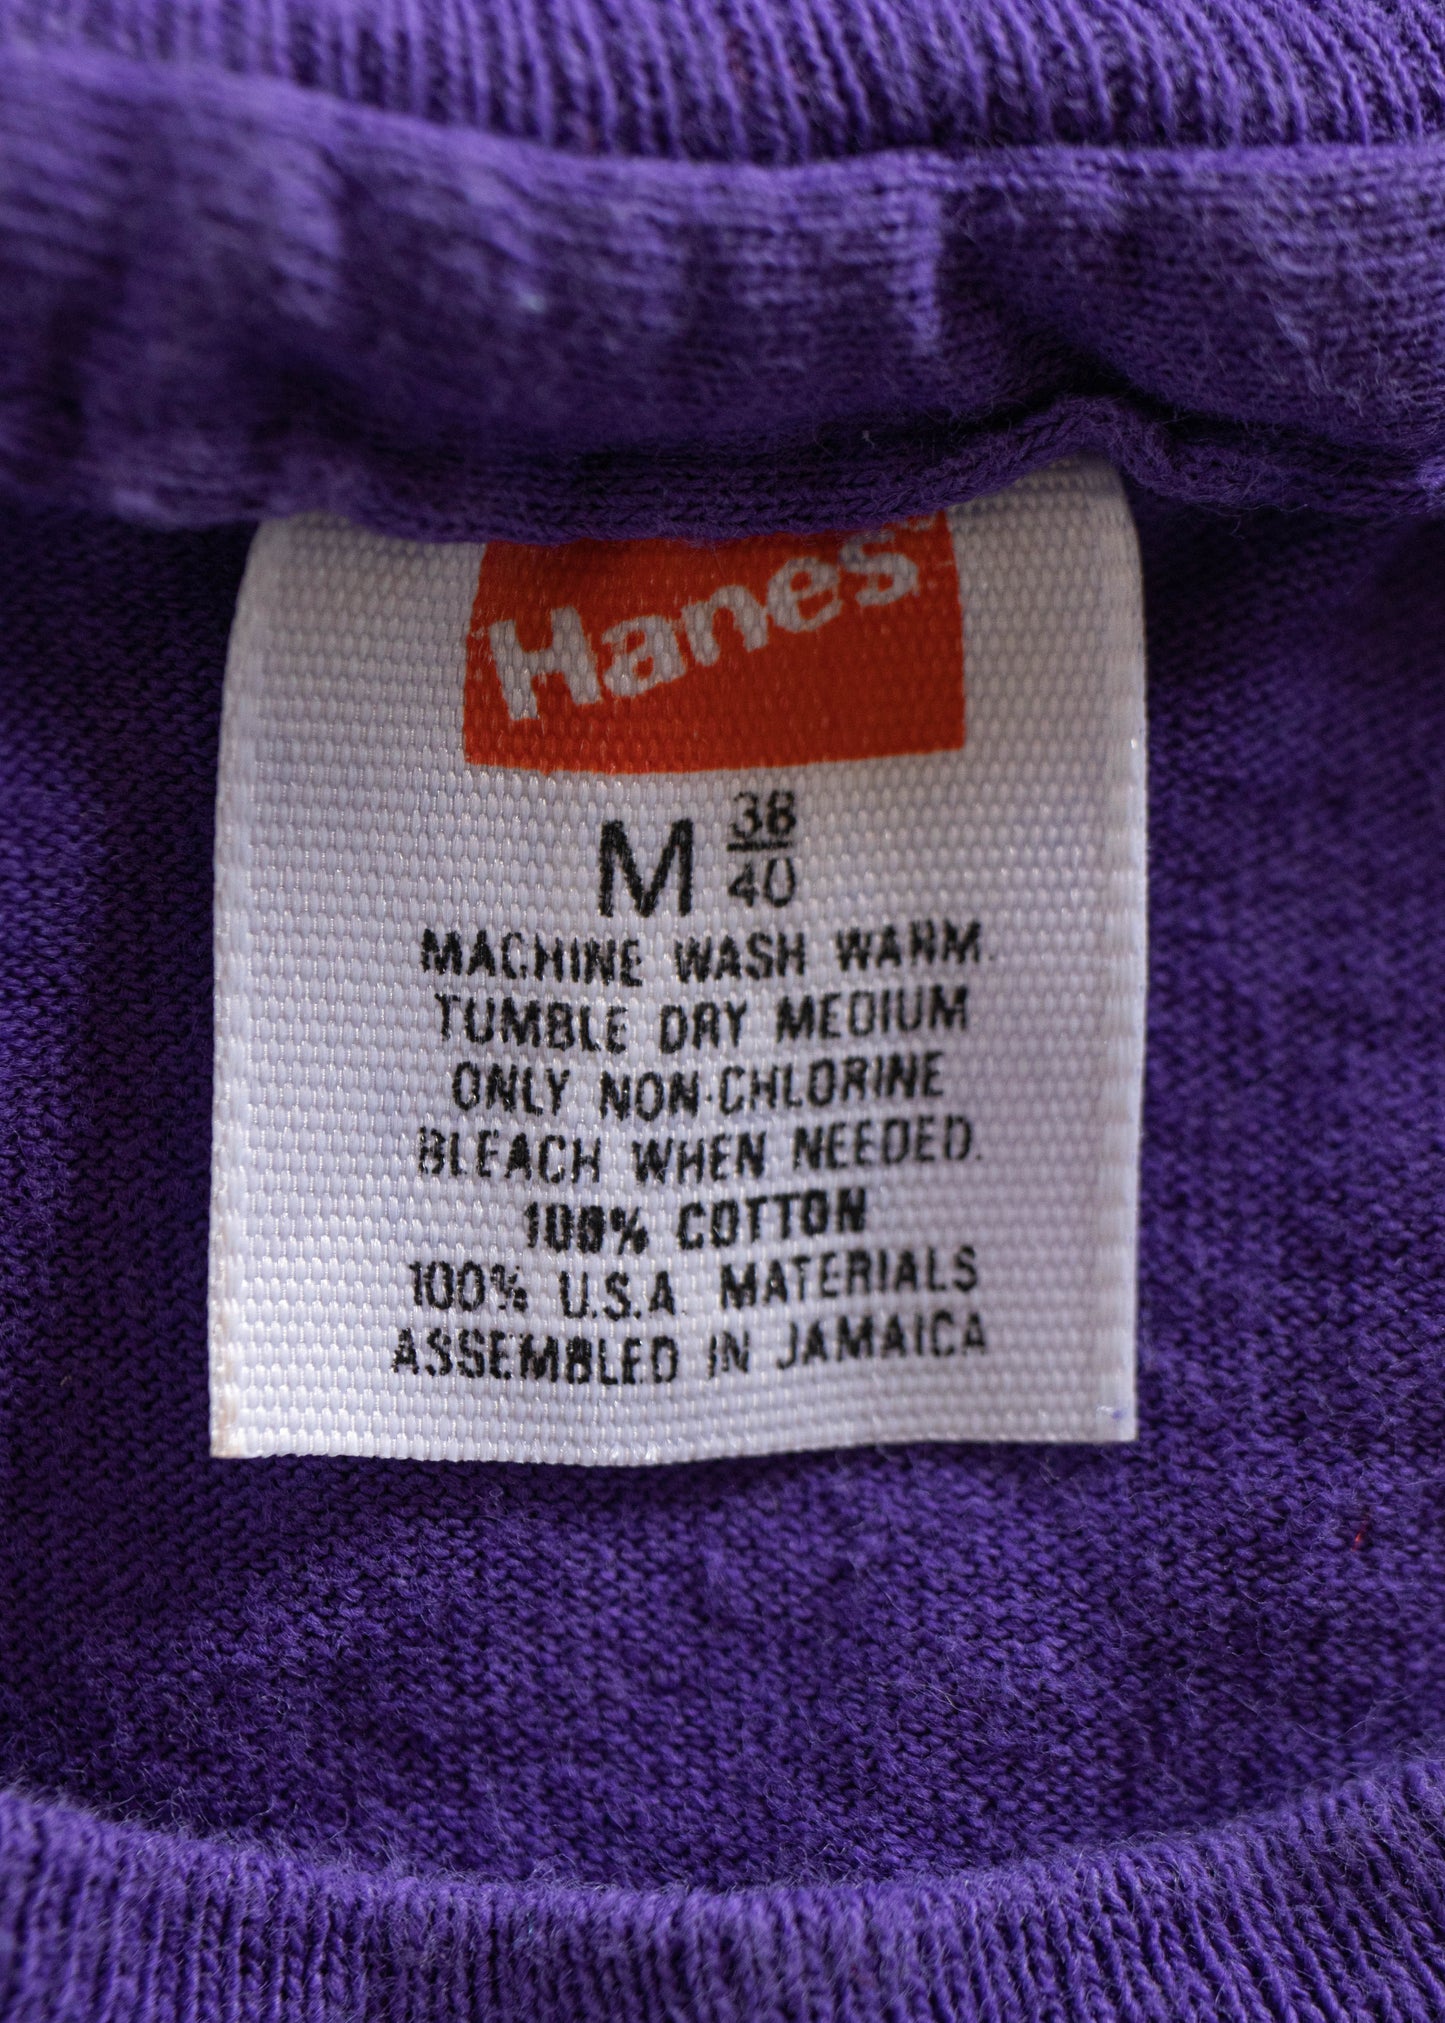 1980s Hanes Selvedge Pocket T-Shirt Size S/M